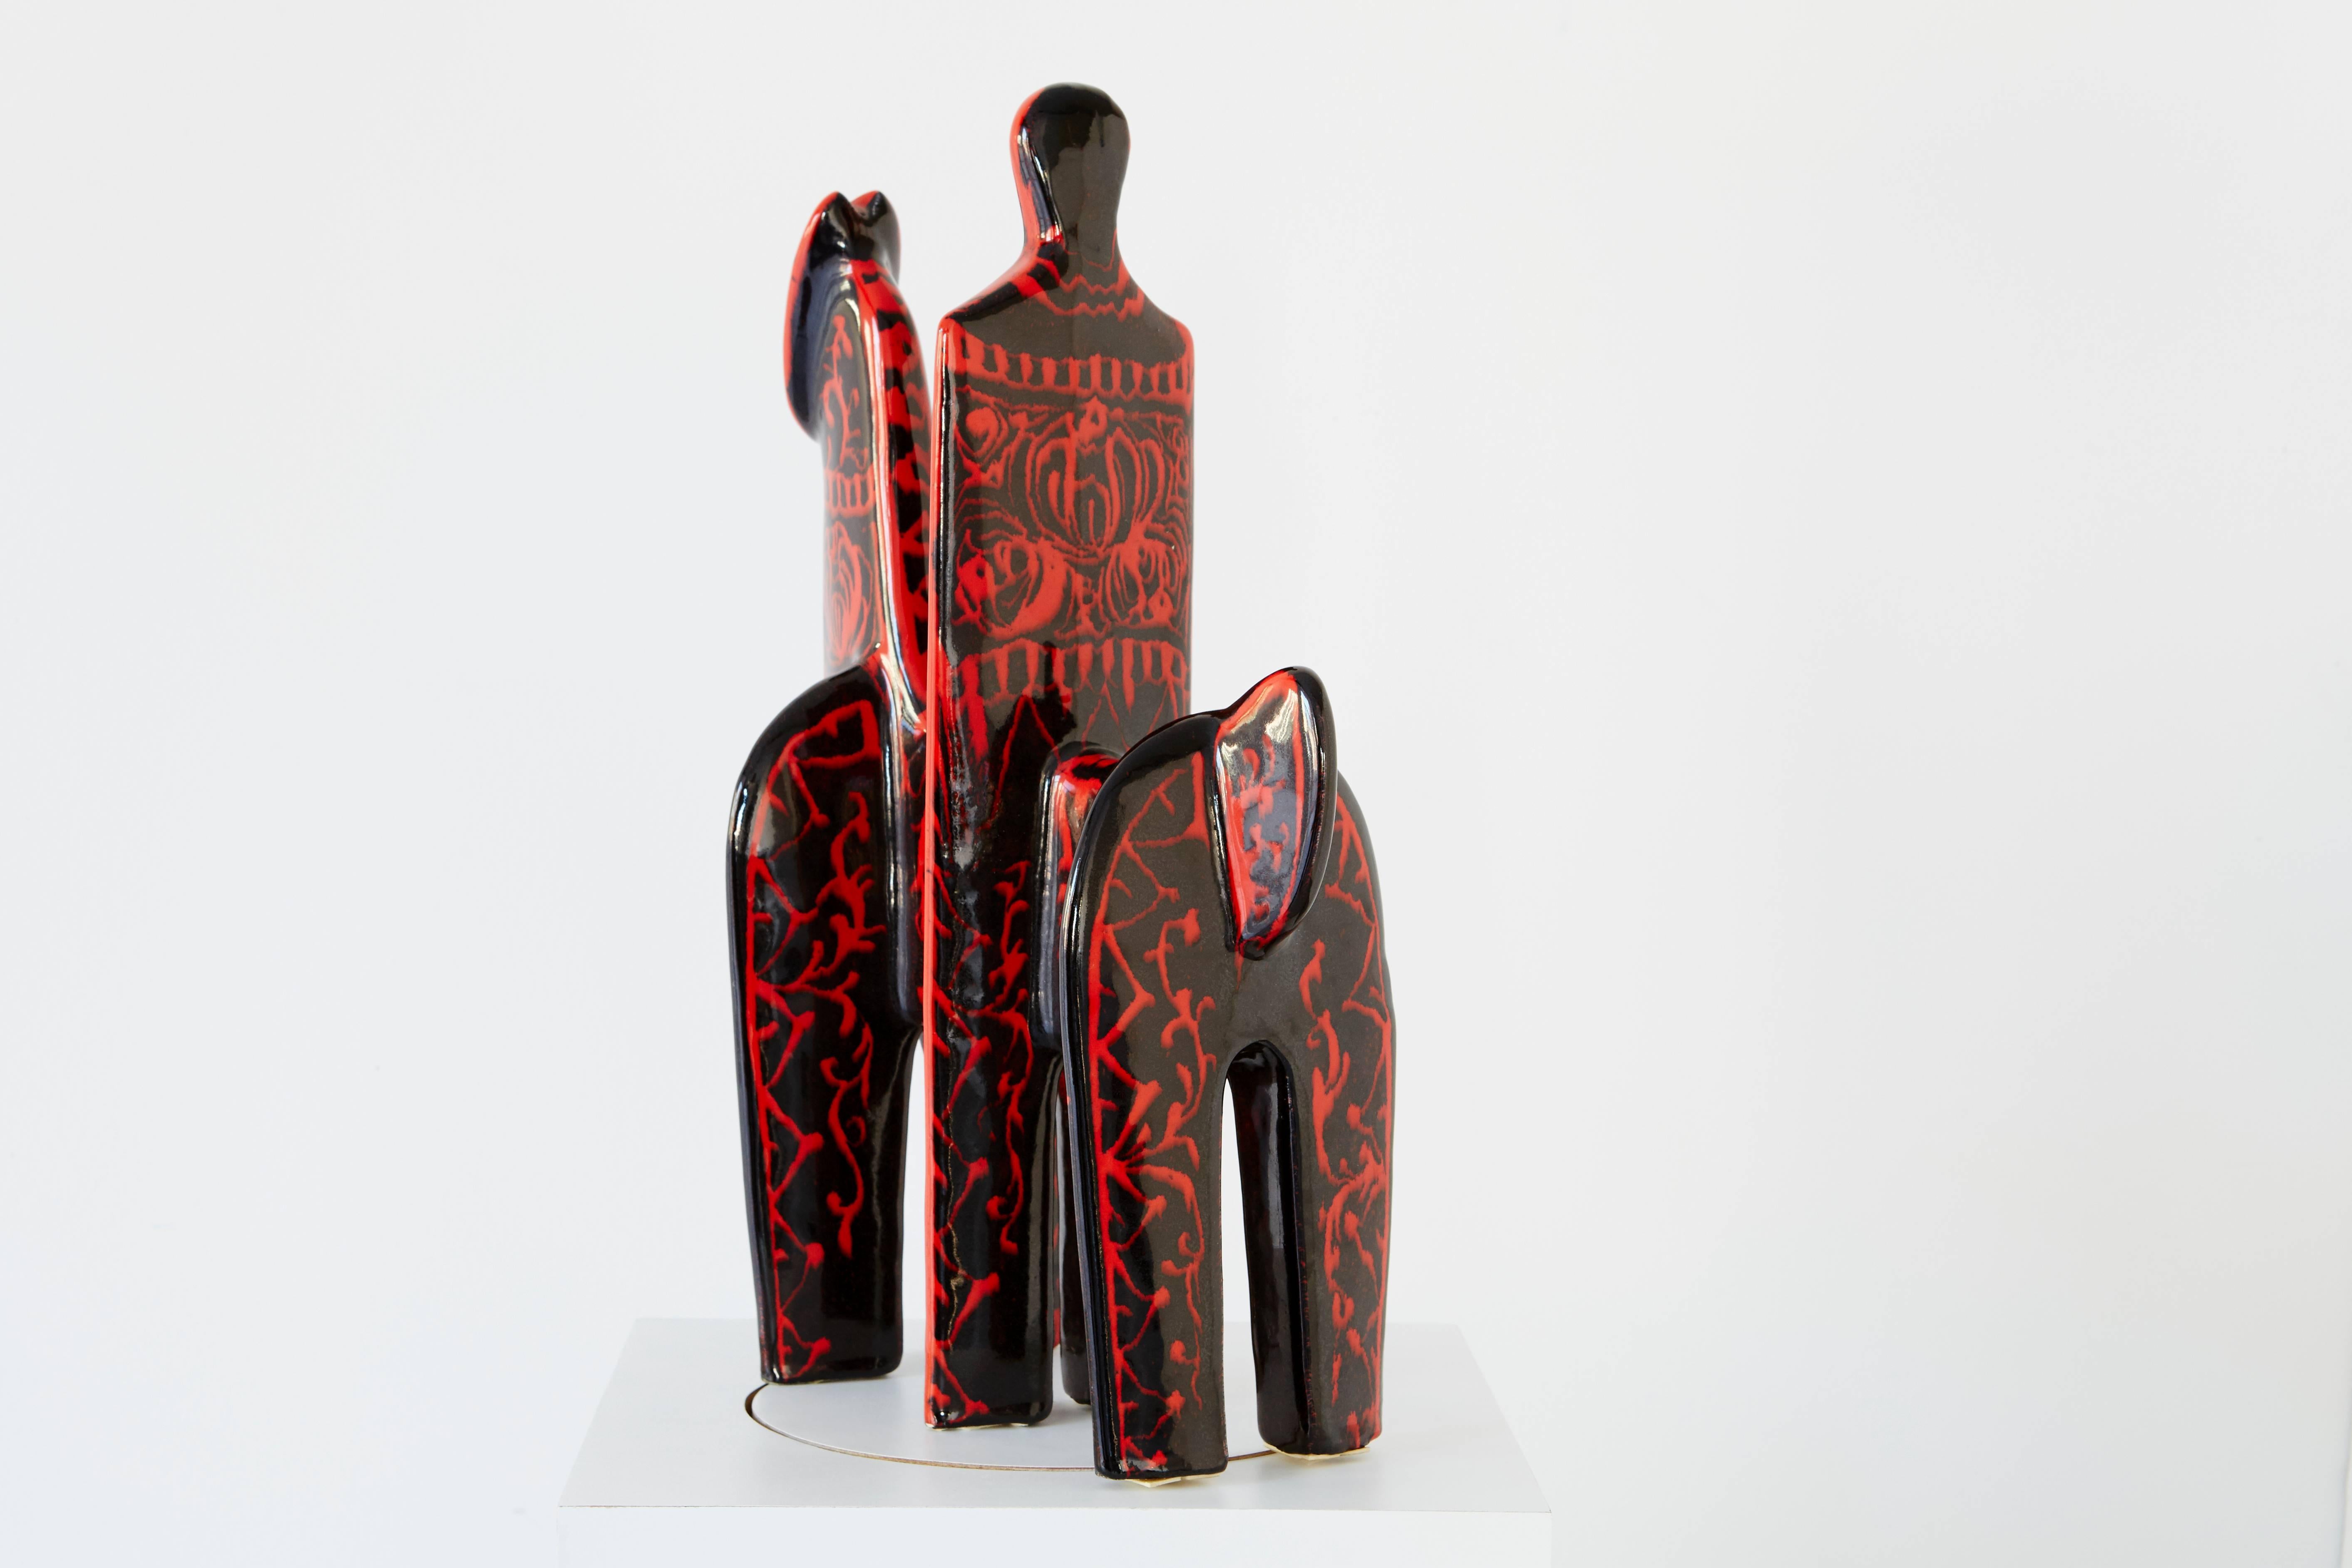 Alvino Bagni Glazed Ceramic Sculpture for Raymor 1